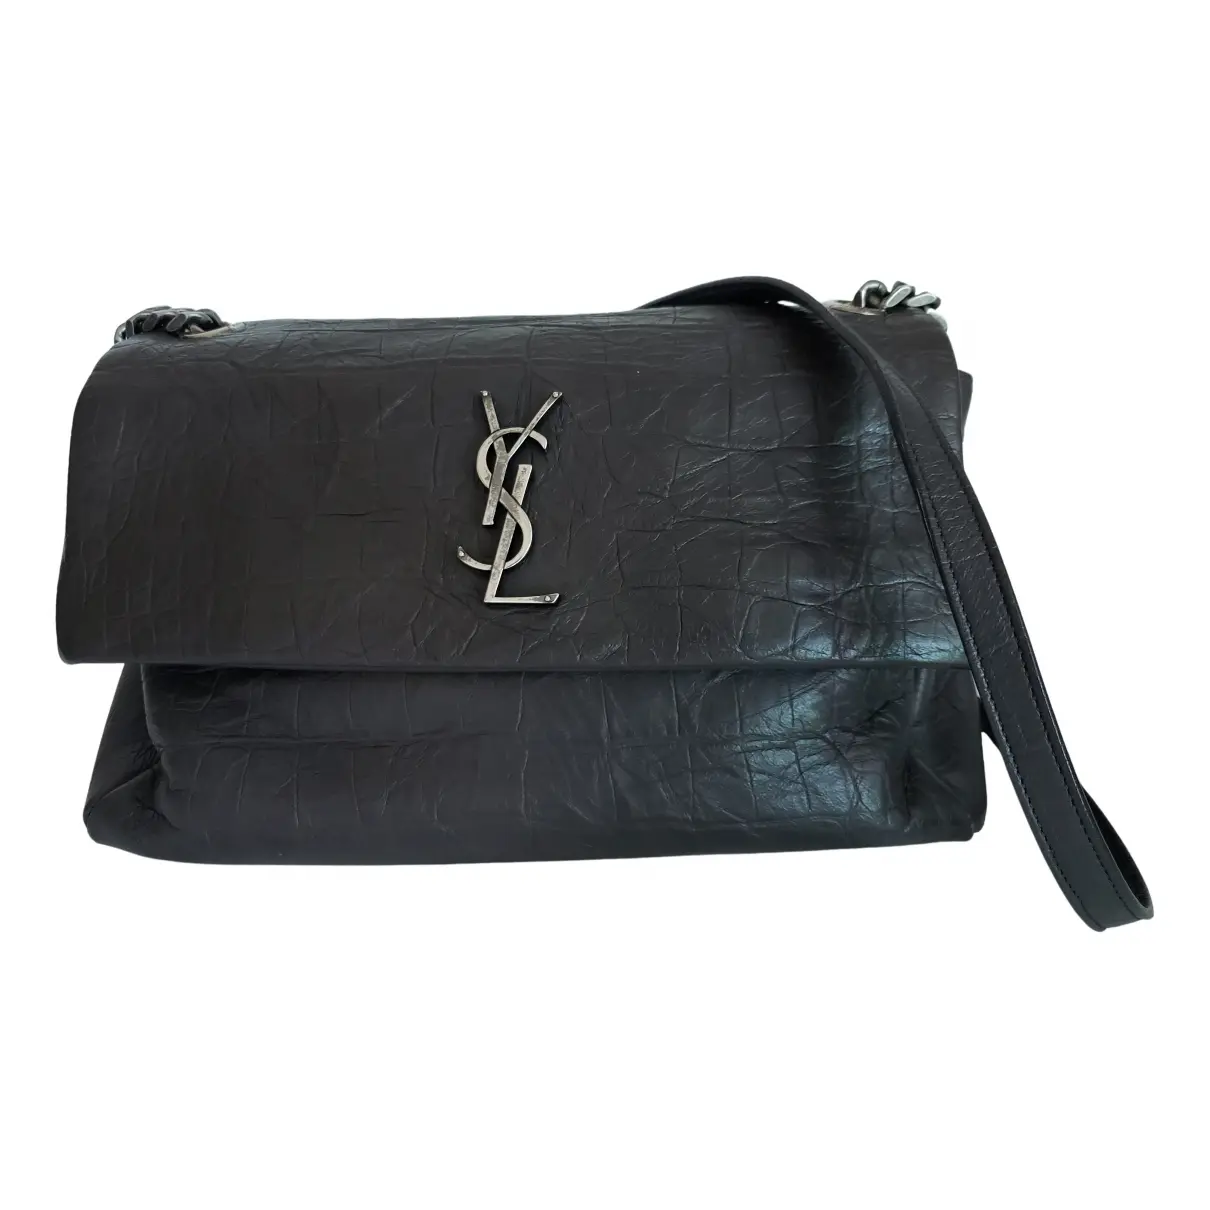 West Hollywood leather handbag Saint Laurent